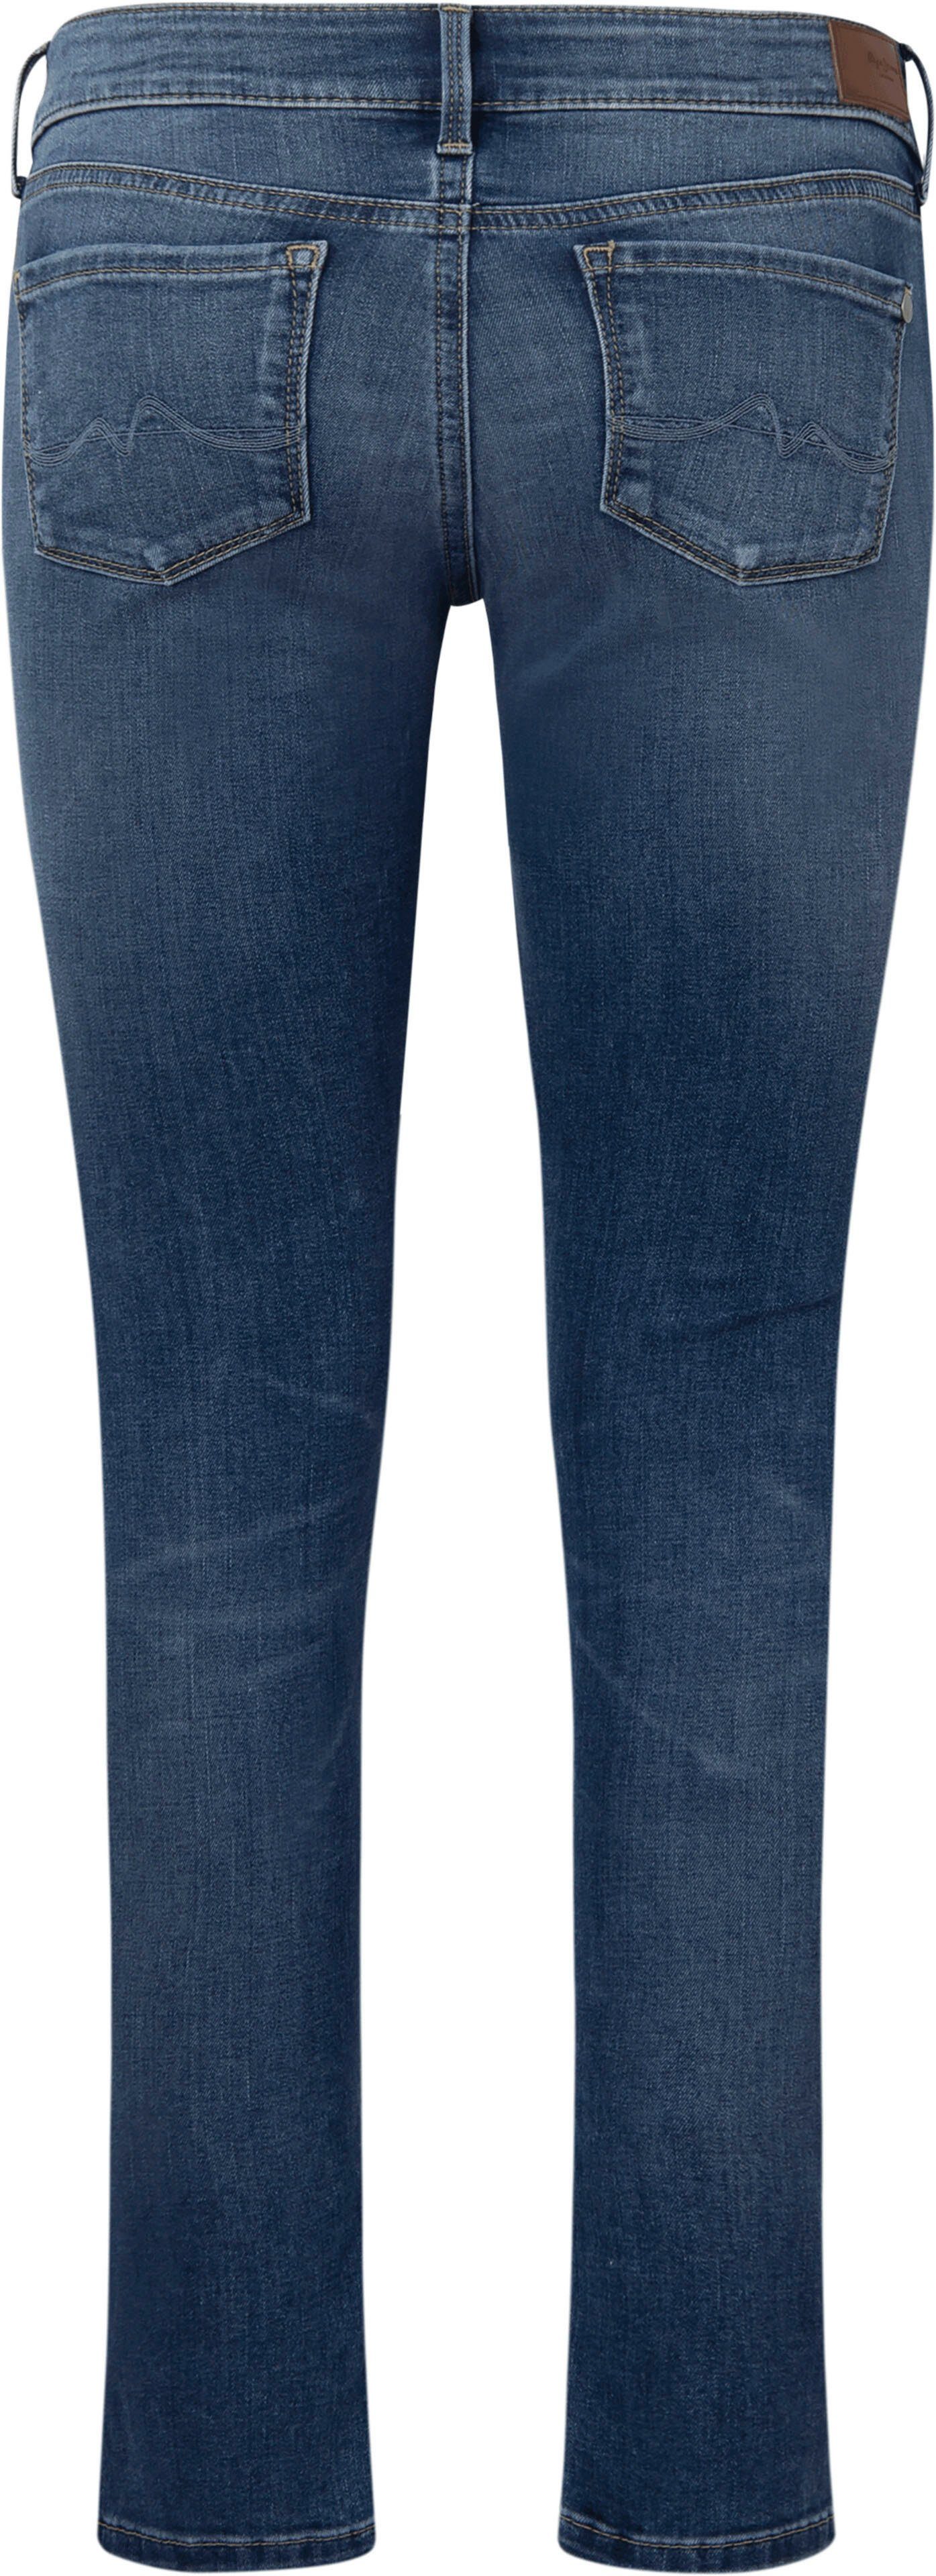 im Jeans mit 1-Knopf 5-Pocket-Stil Bund blue Pepe und SOHO Skinny-fit-Jeans Stretch-Anteil